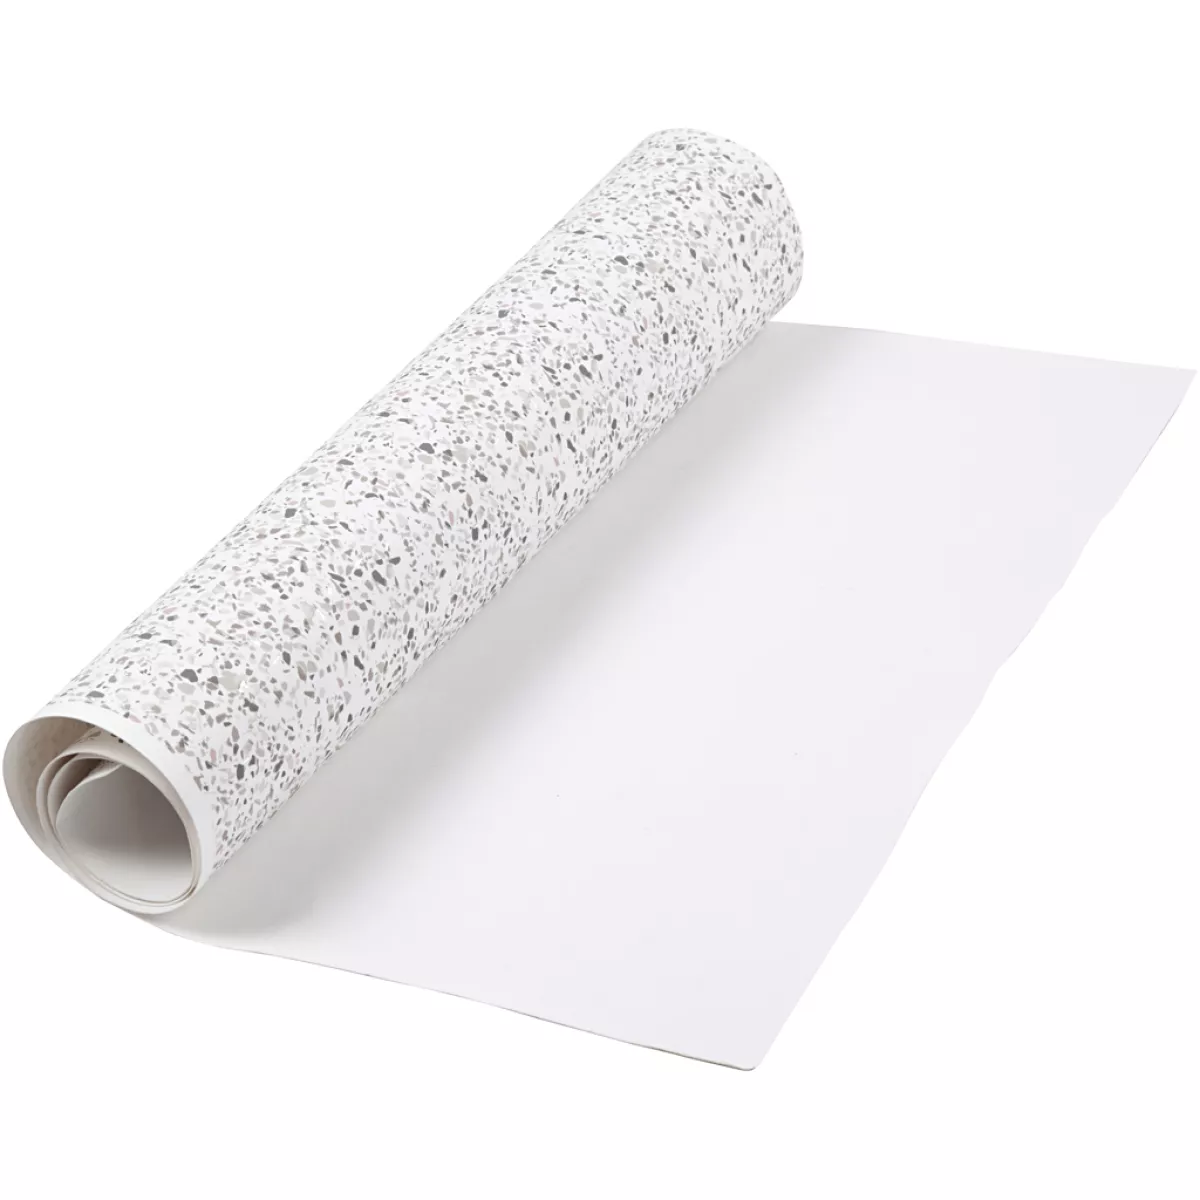 #2 - Læderpapir, terrazzo, B: 49,5 cm, folie,print, 350 g, hvid, 1 m/ 1 rl.